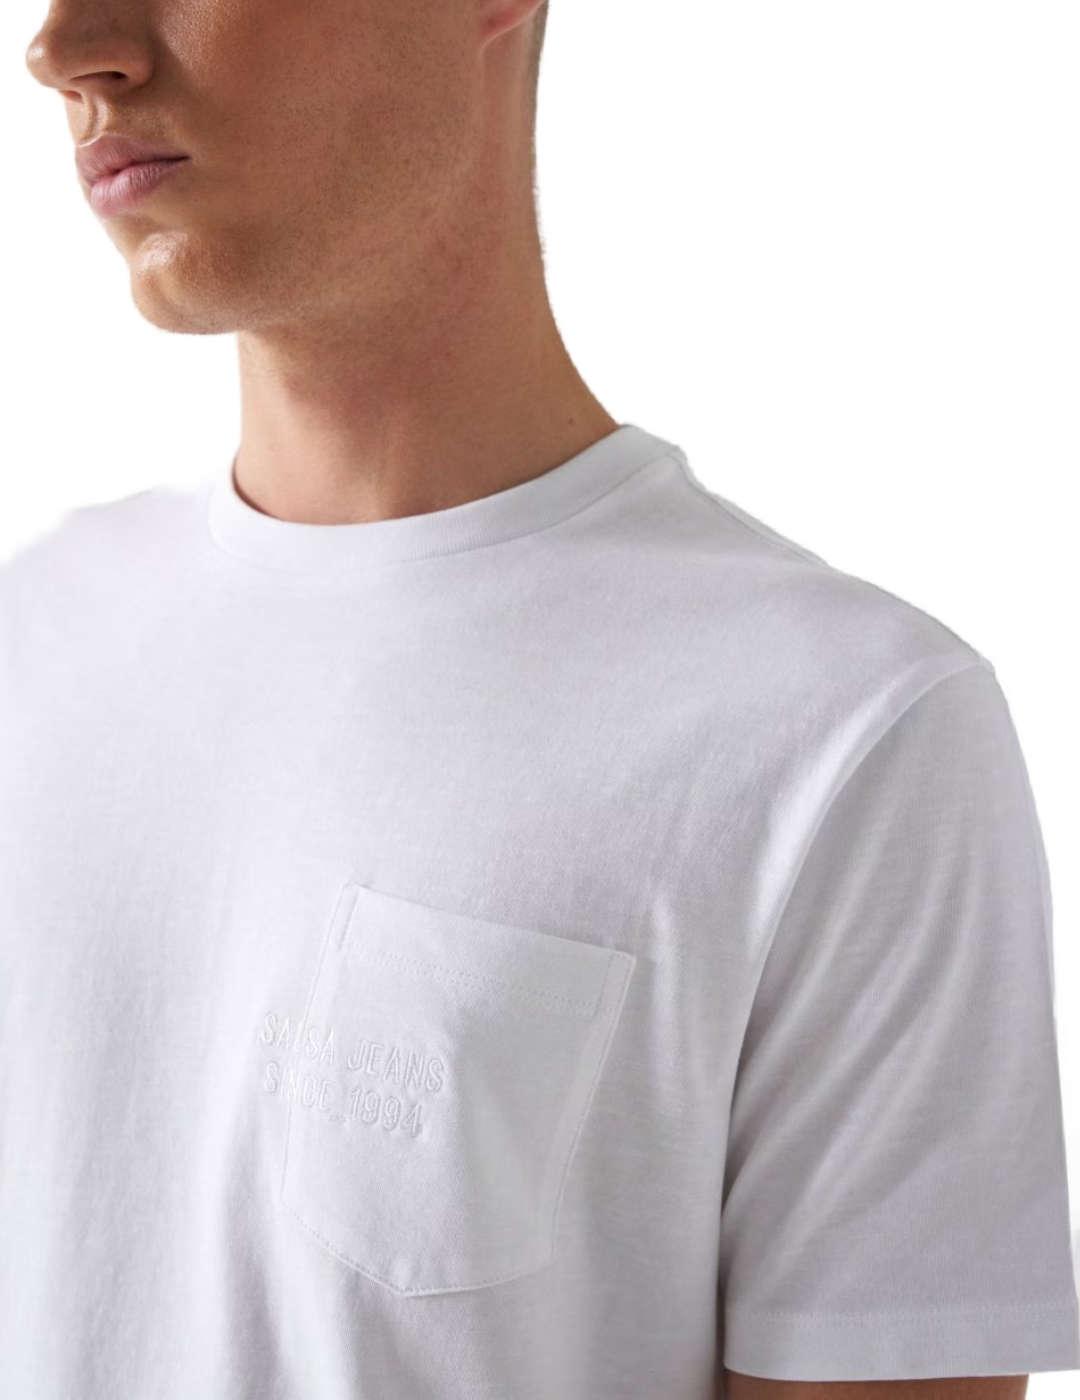 Camiseta Salsa con tinte vegetal blanca manga corta hombre